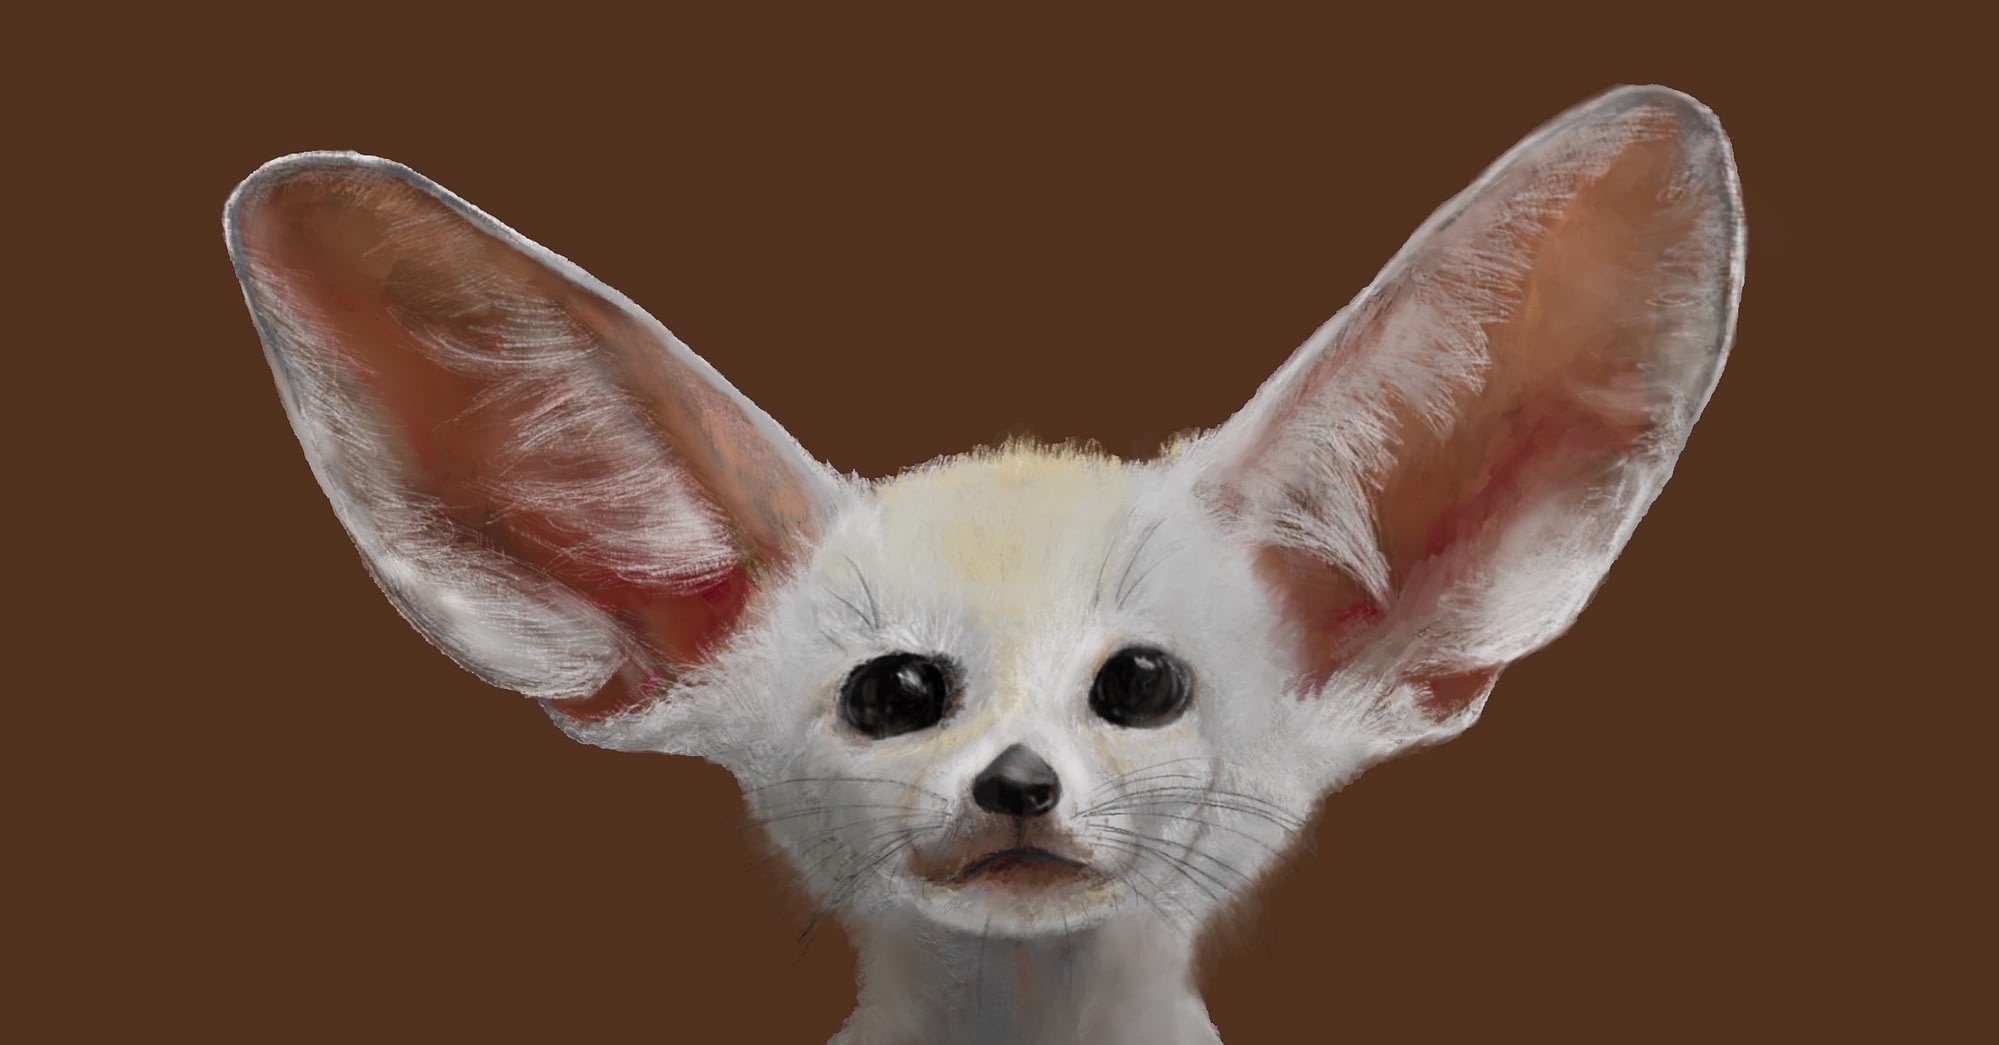 Fennec fox - Artwork - Untraced digital portrait of a fennec fox drawn from scratch in Procreate on iPad Pro. Part of a series I'm planning of digitally-drawn exotic/beautiful animal species'.